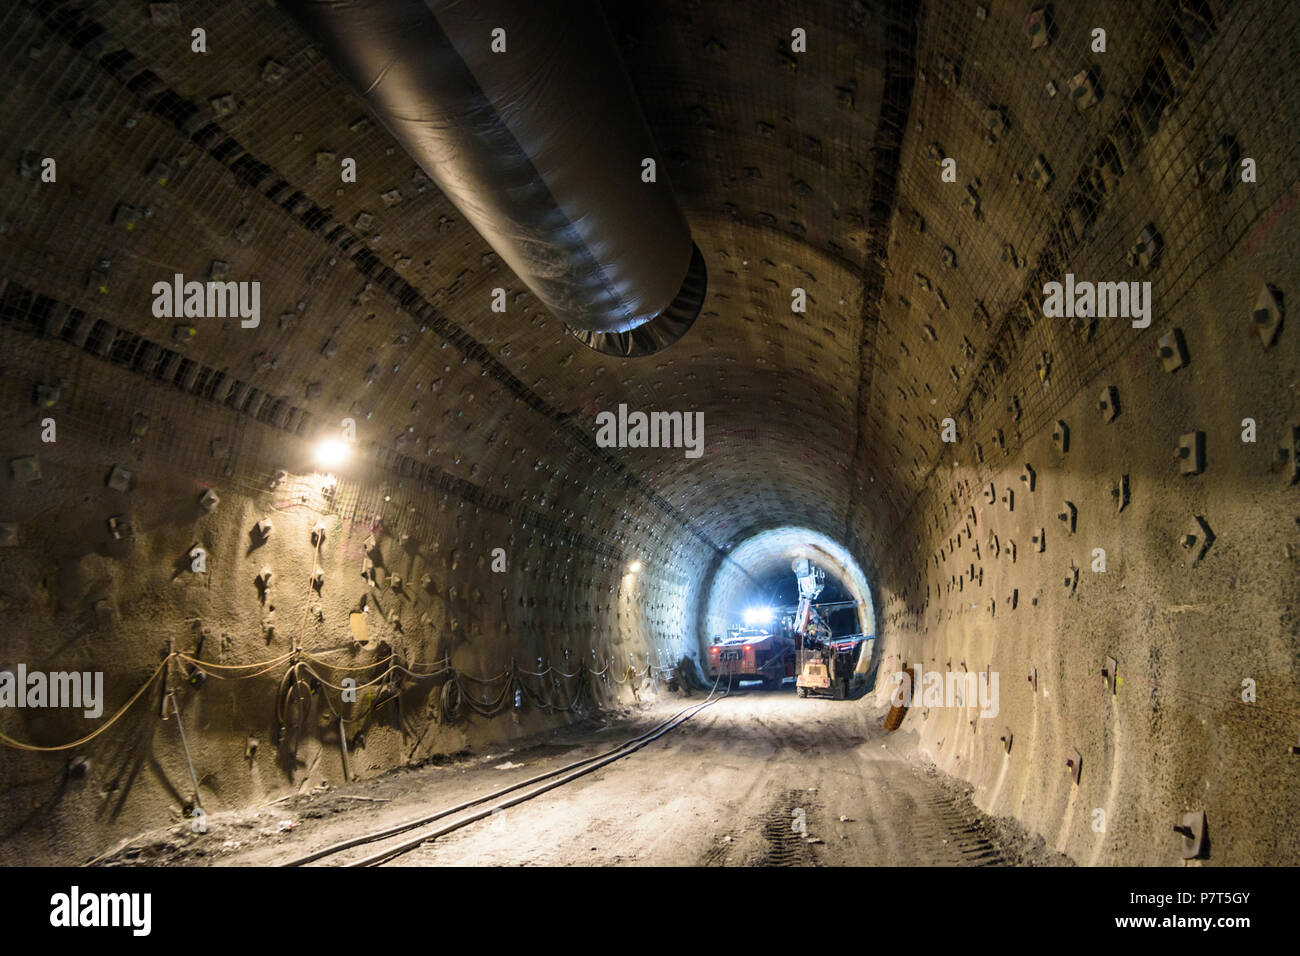 Spital am Semmering: Drilling the blast holes at Semmering-Basistunnel (Semmering Base Tunnel) of Semmeringbahn (Semmering railway) under construction Stock Photo